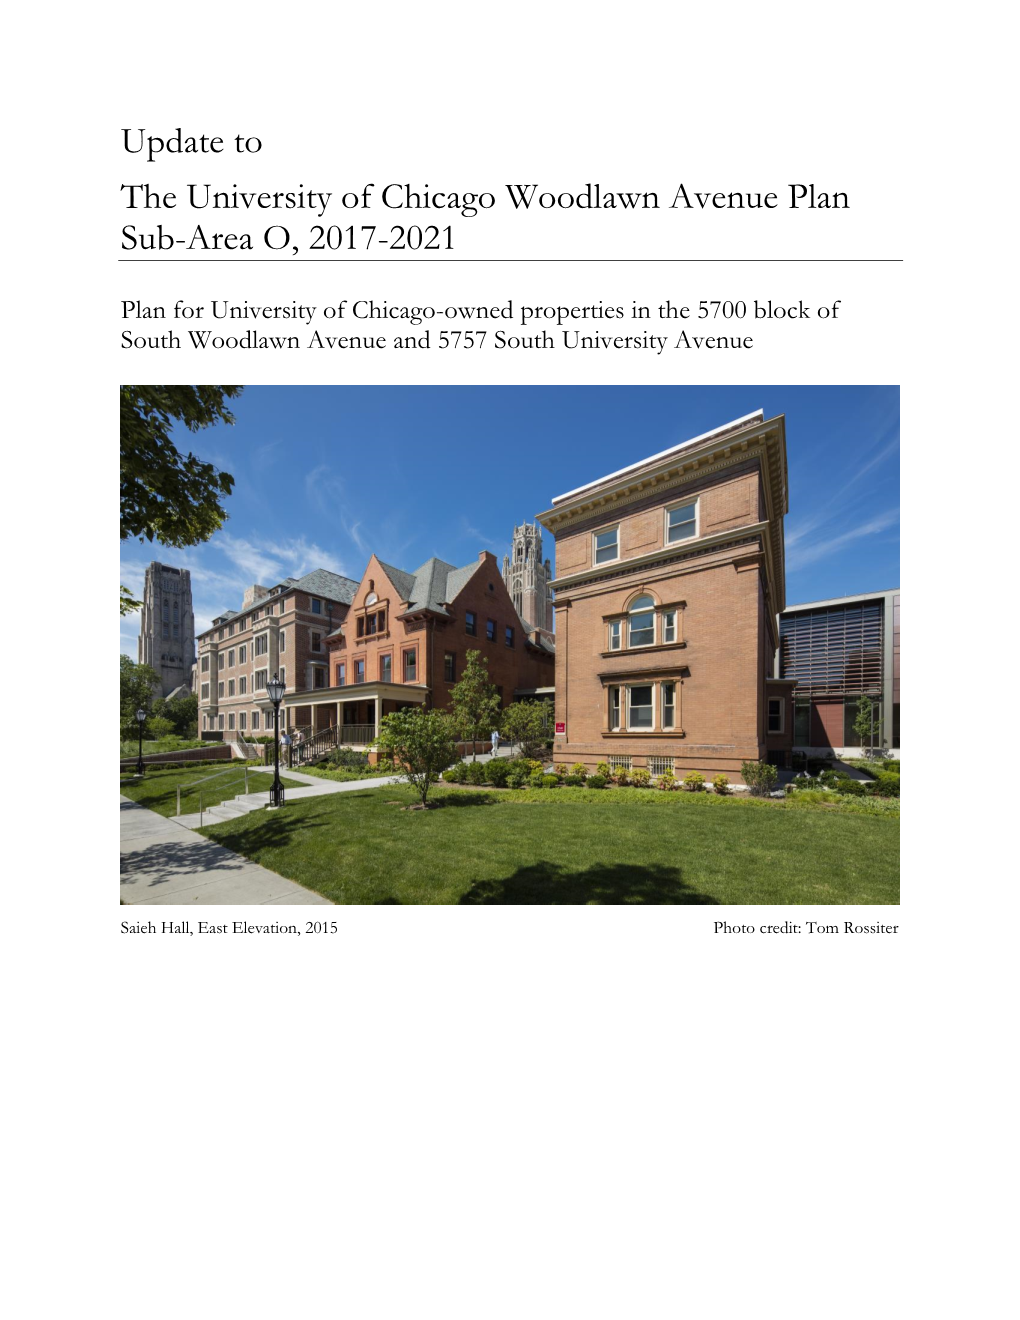 The University of Chicago Woodlawn Avenue Plan Sub-Area O, 2017-2021